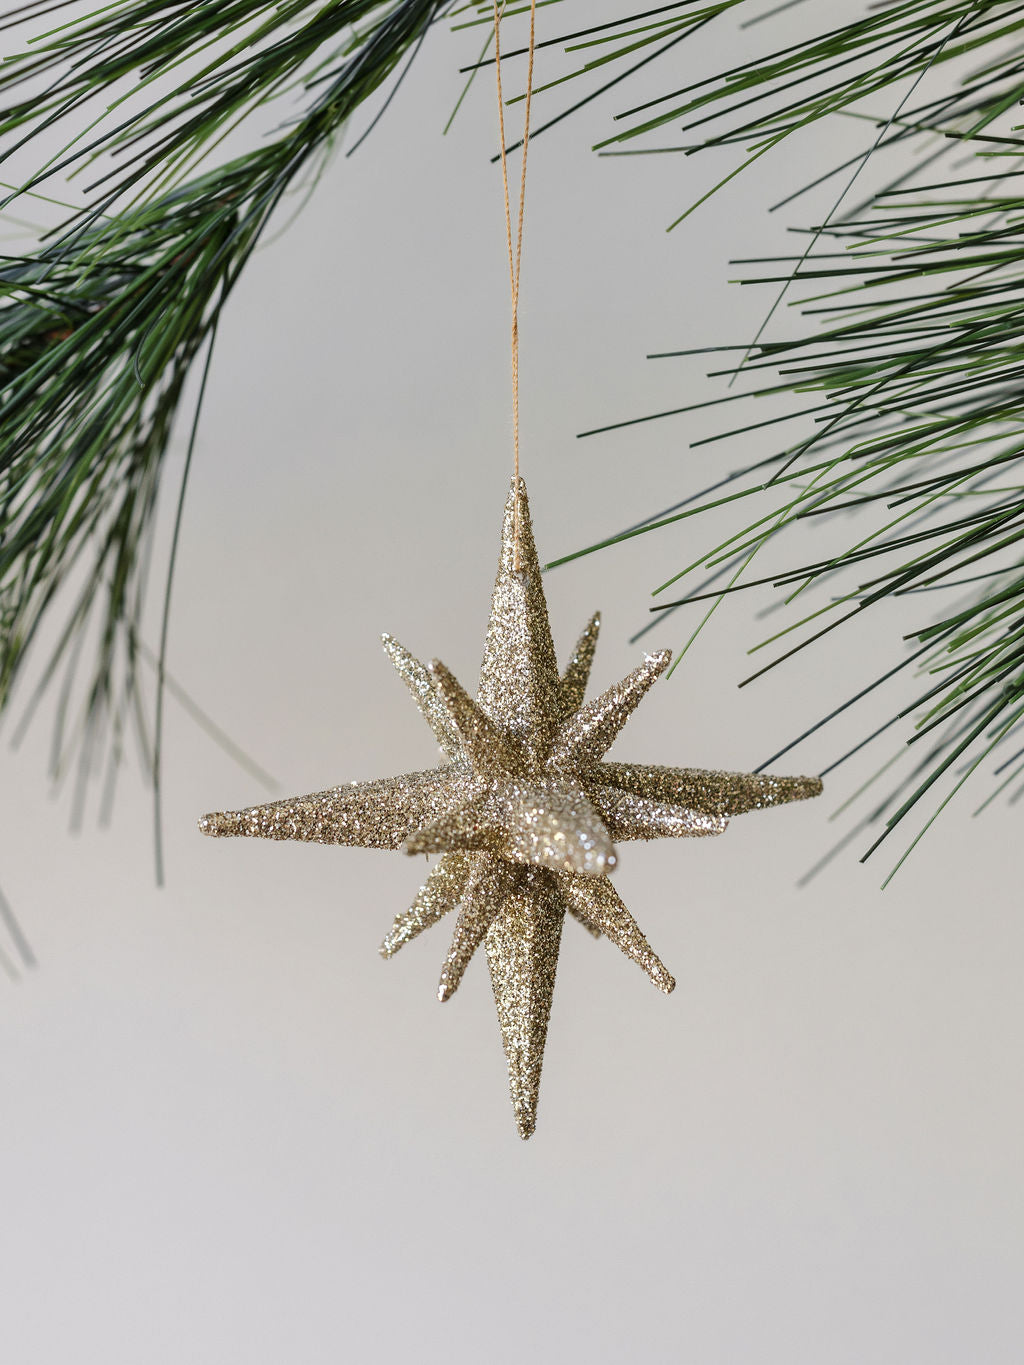 Starburst ornament